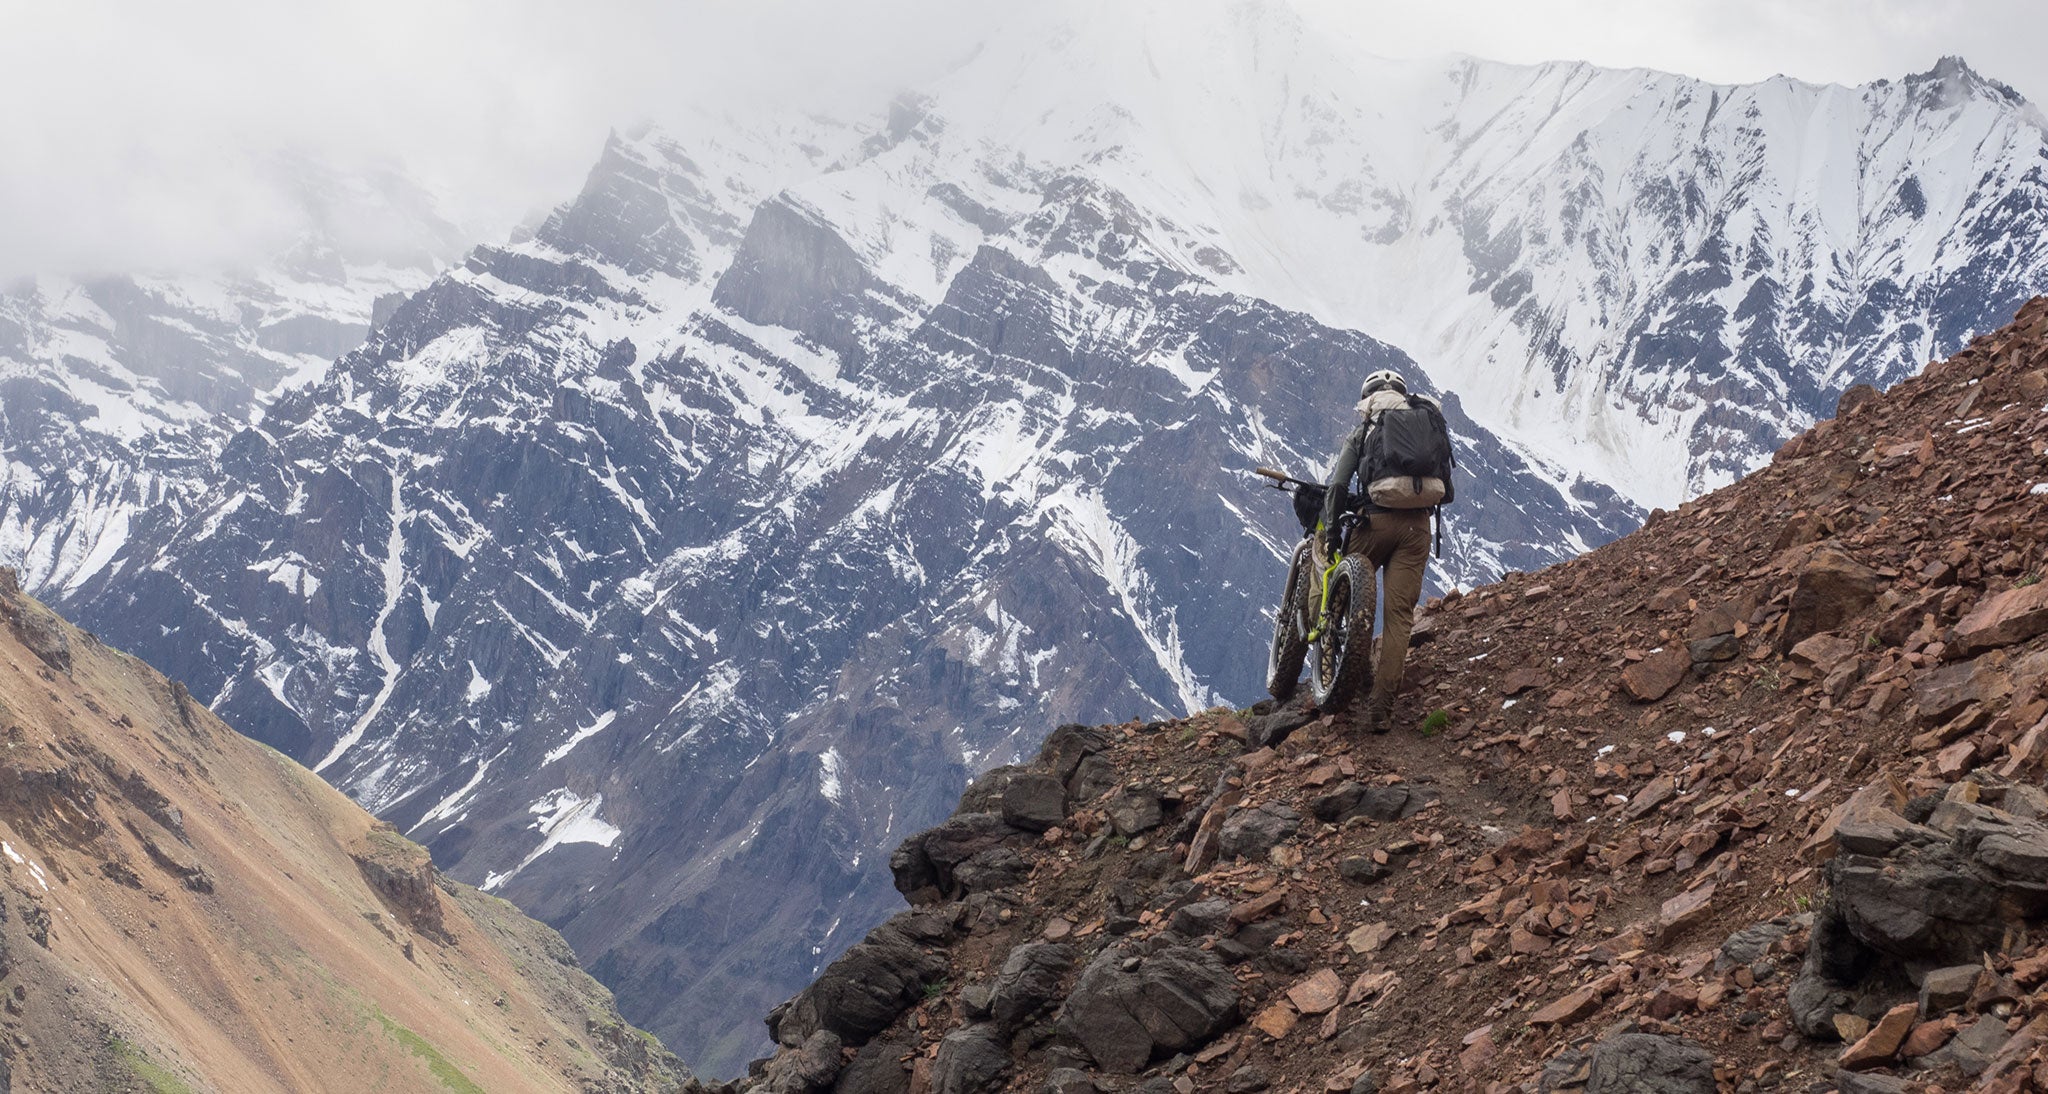 Ultralight bikepacker on a mountain